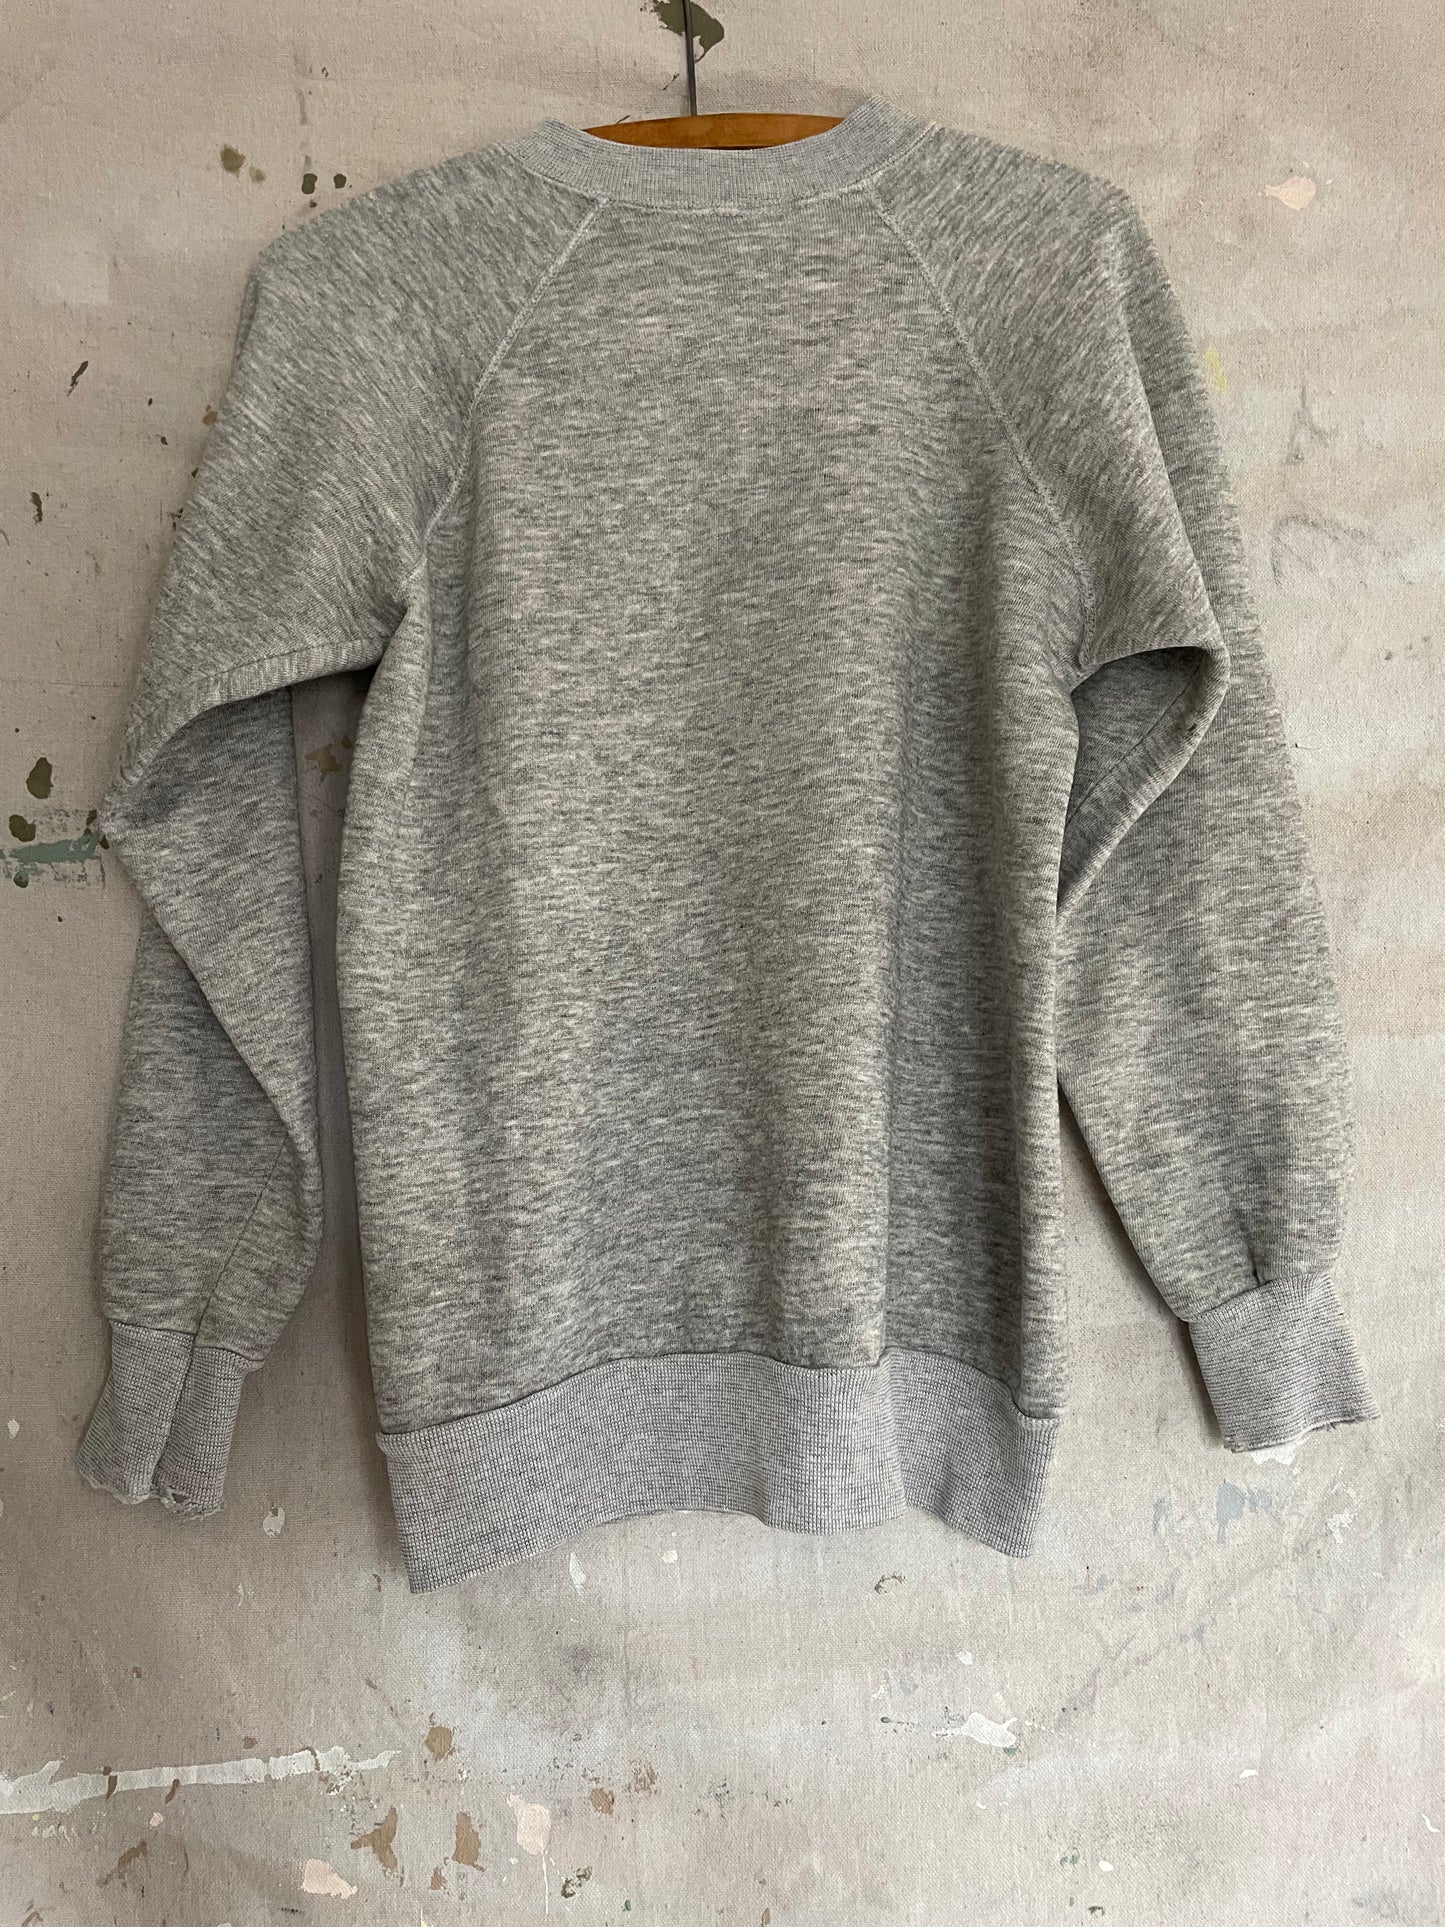 70s/80s Blank Heather Grey Sweatshirt